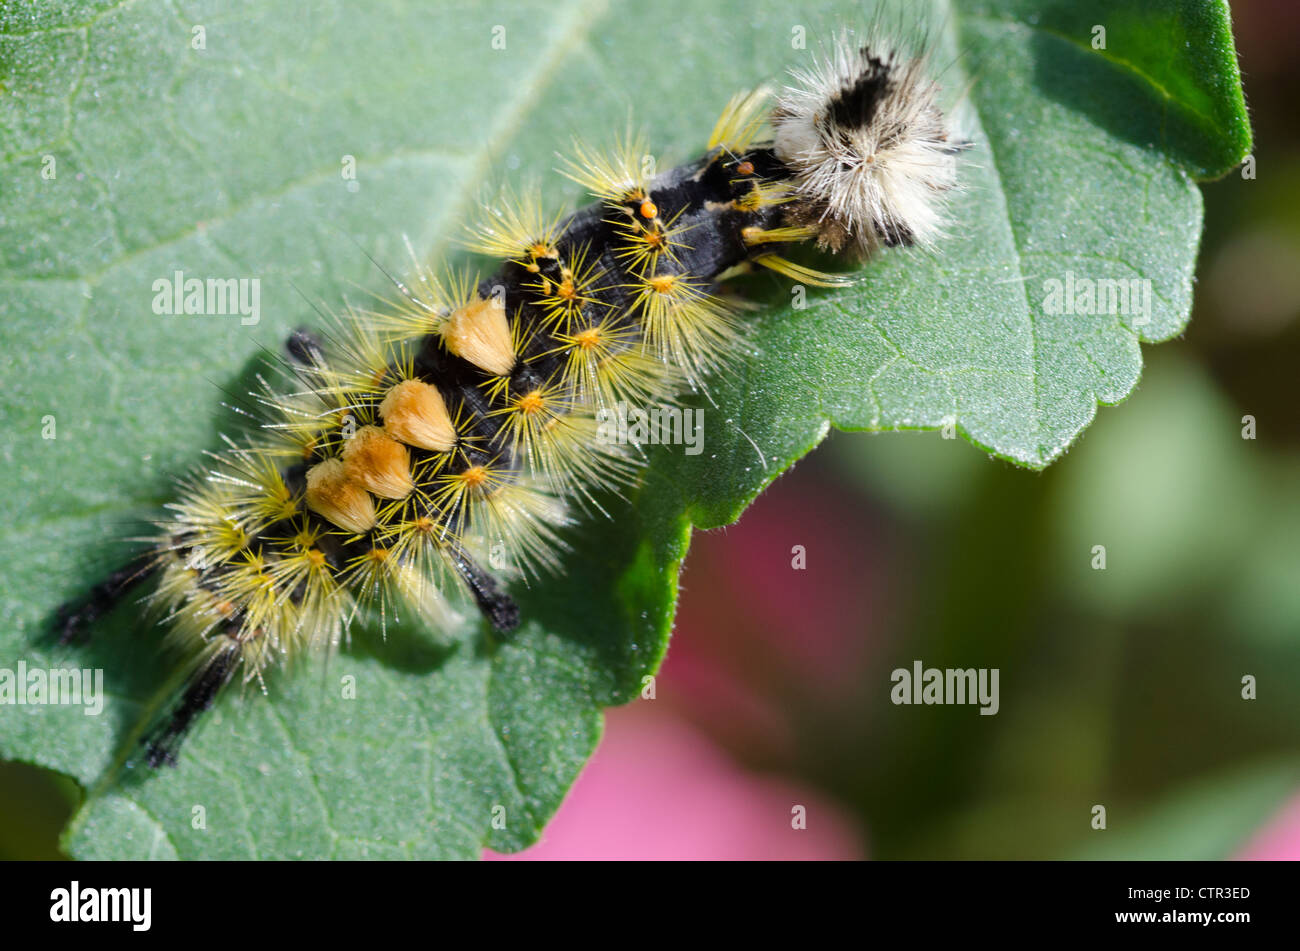 Close up of a Rusty Tussock Moth caterpillar on a leaf, Fairbanks, Interior Alaska, Summer Stock Photo